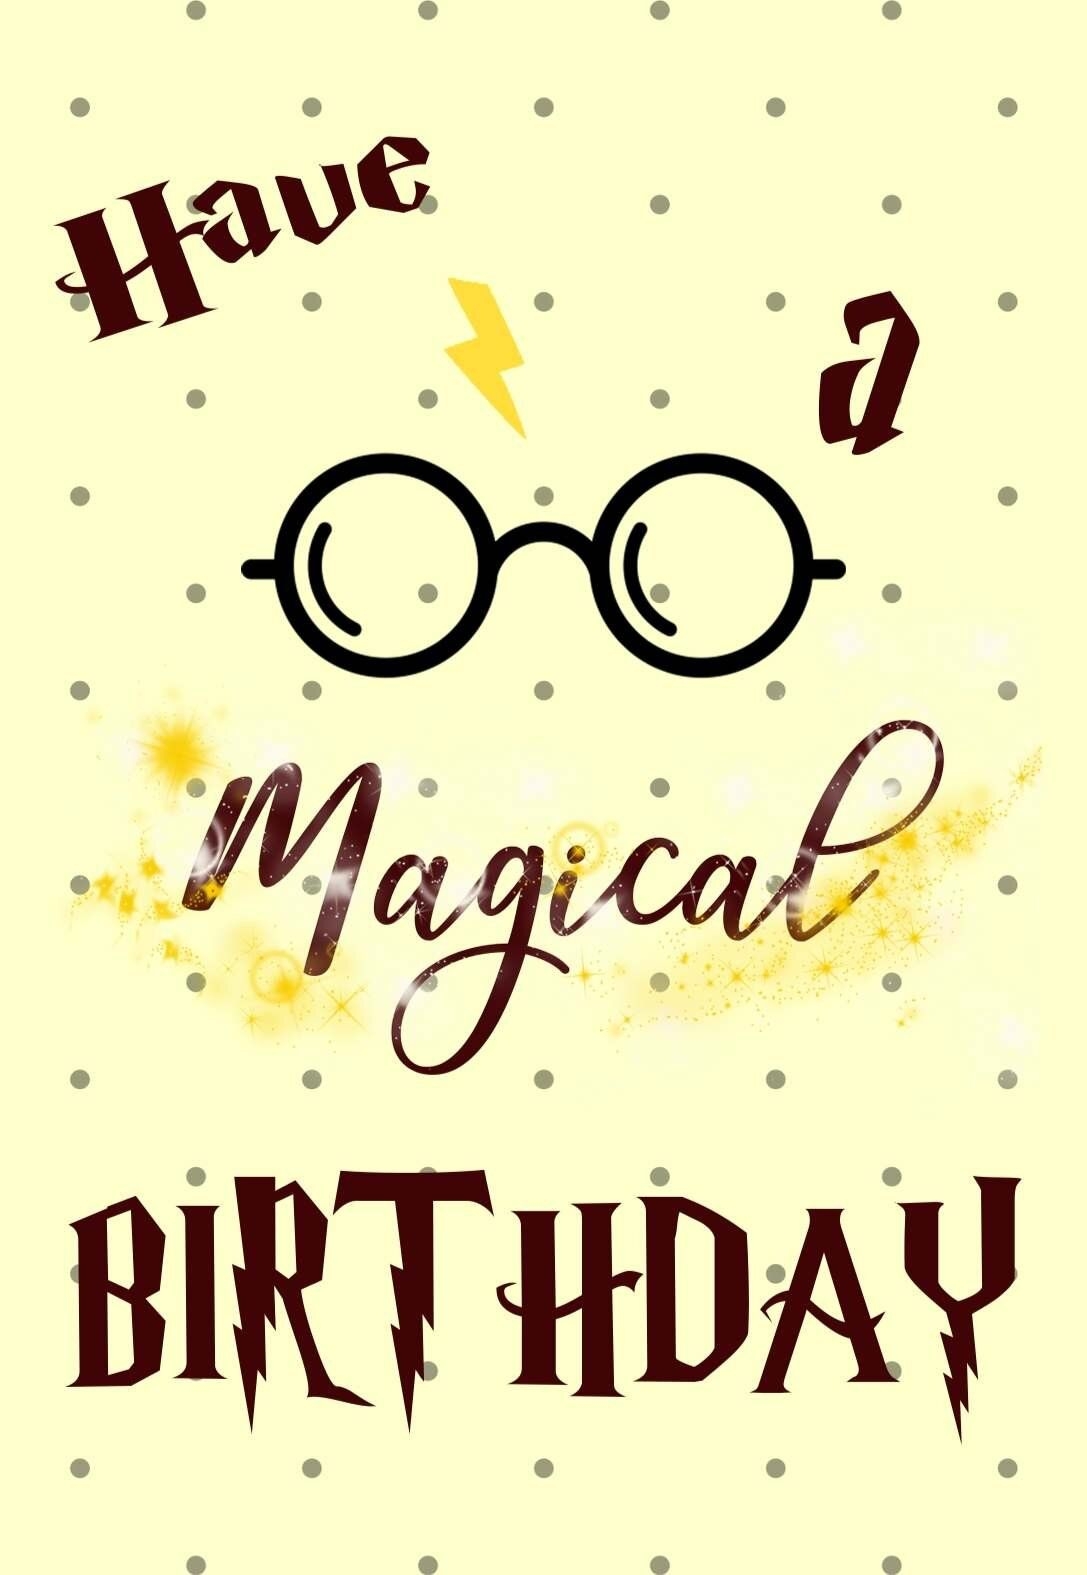 Harry Potter Birthday Cards Harry Potter Birthday Happy Birthday Harry Potter